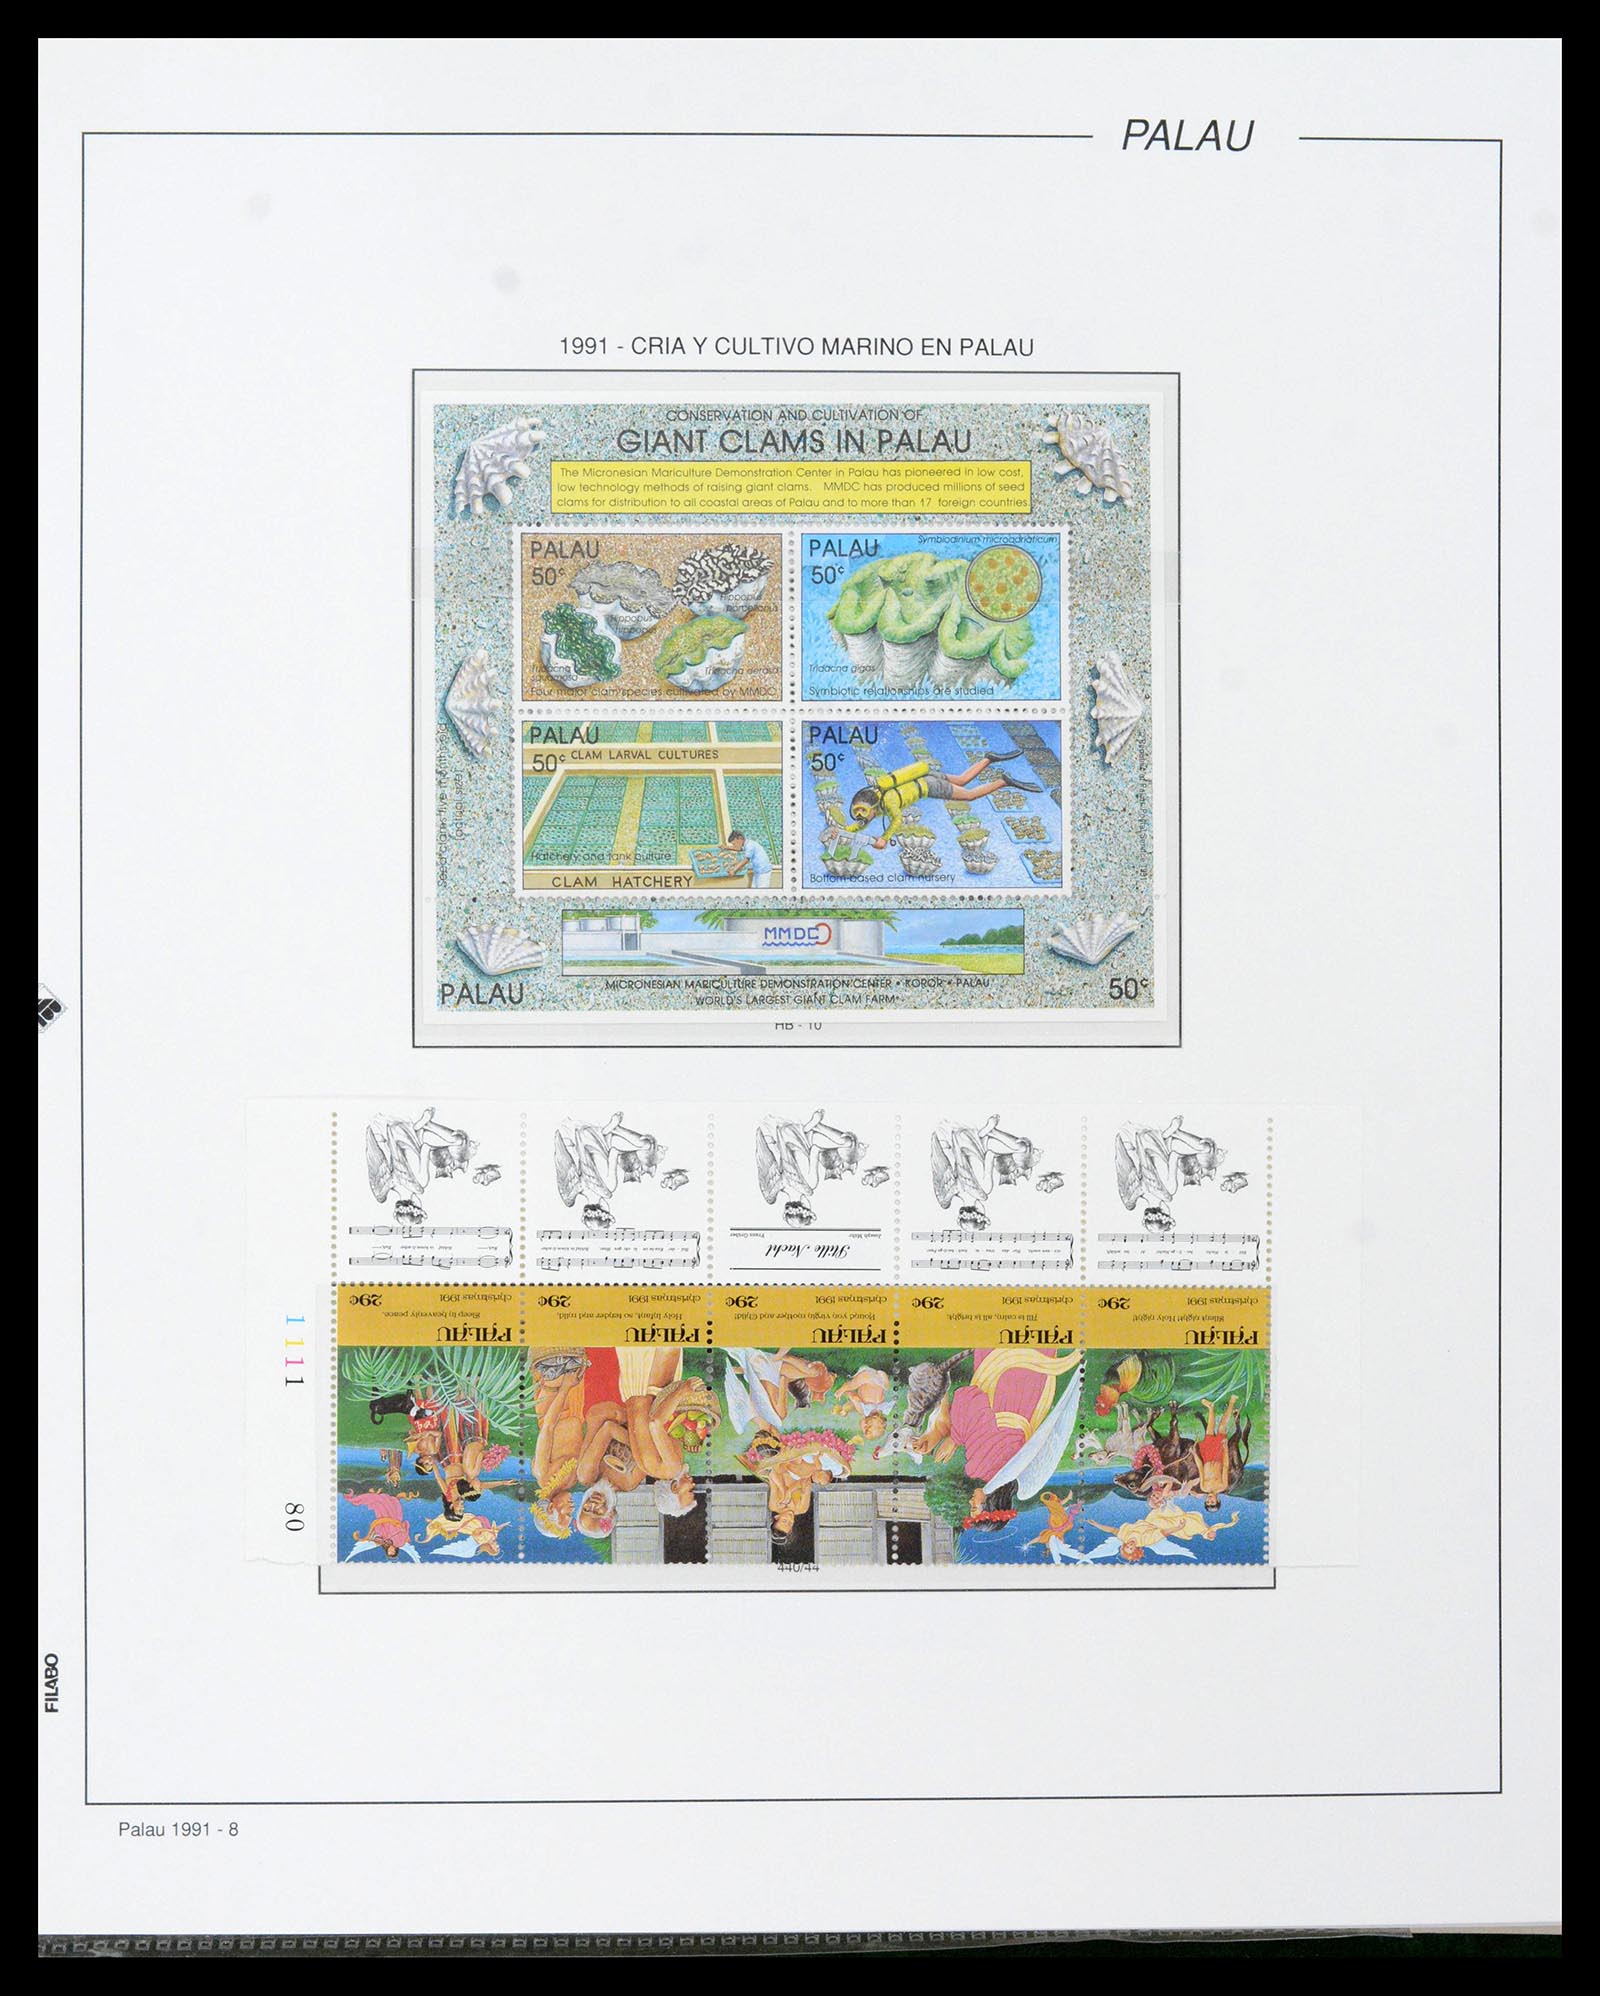 39222 0047 - Stamp collection 39222 Palau, Micronesia and Marshall islands 1980-1995.